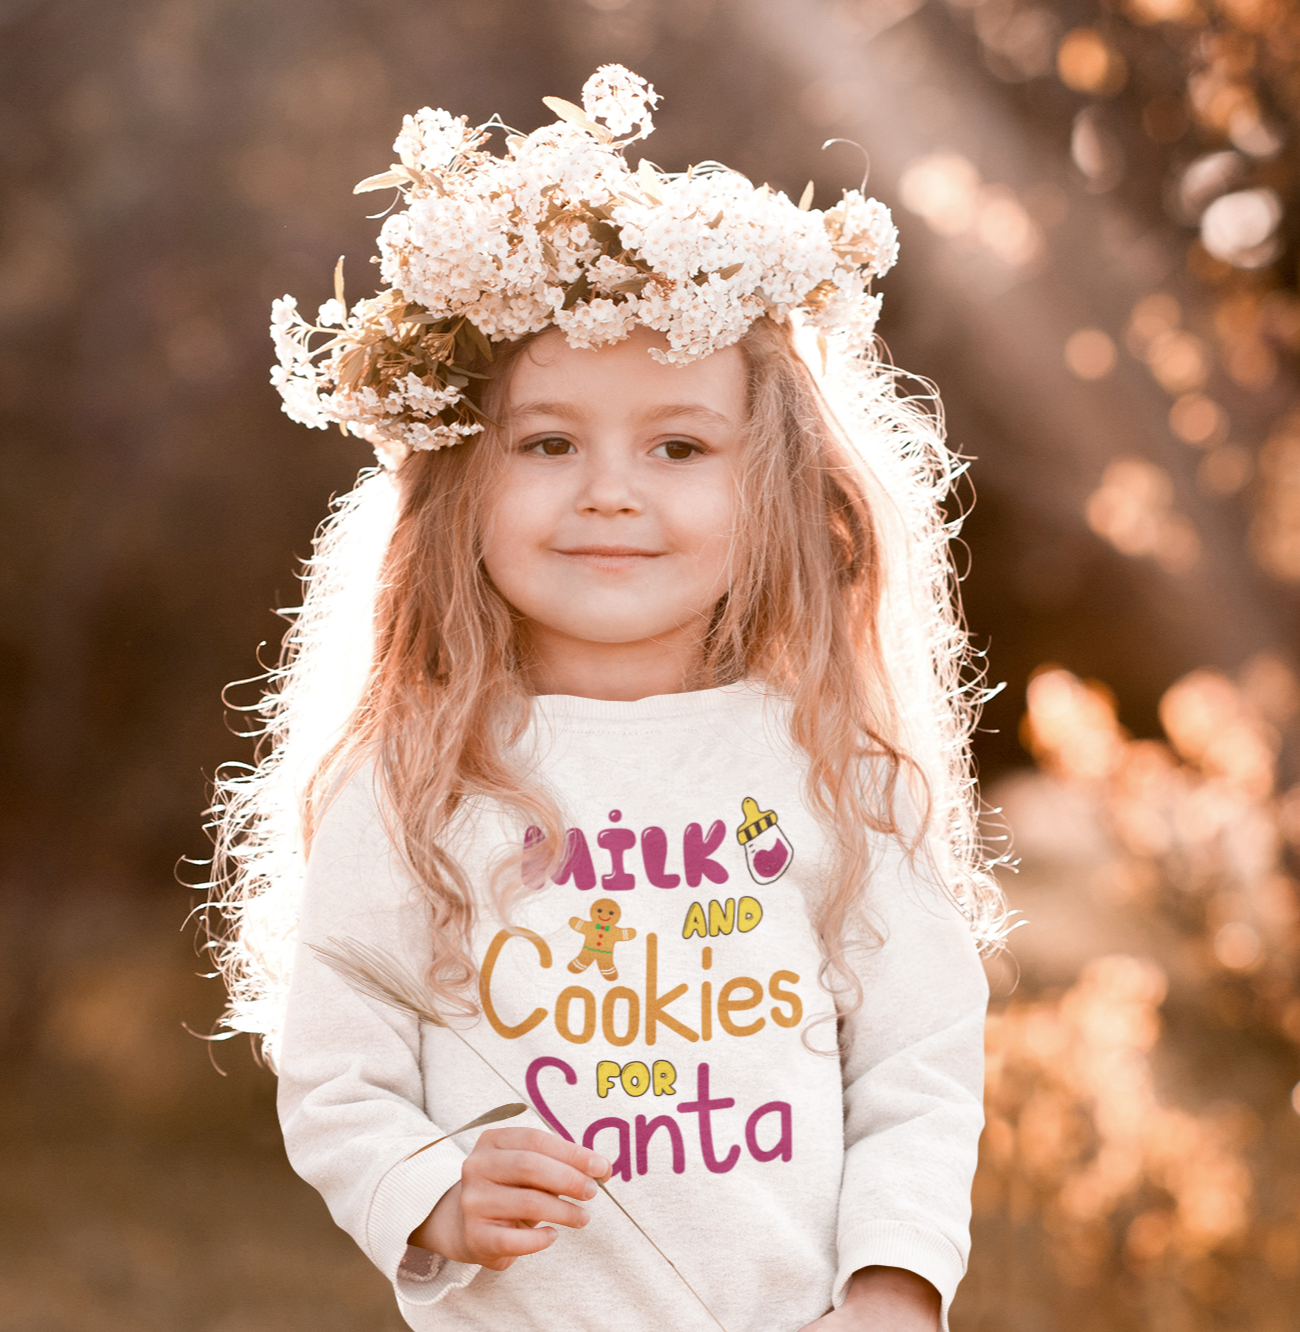 Milk and Cookies for Santa, Toddler Long Sleeves, Christmas Shirts, Christmas Sweatshirts, Christmas, Christmas Clothing, Christmas Decor